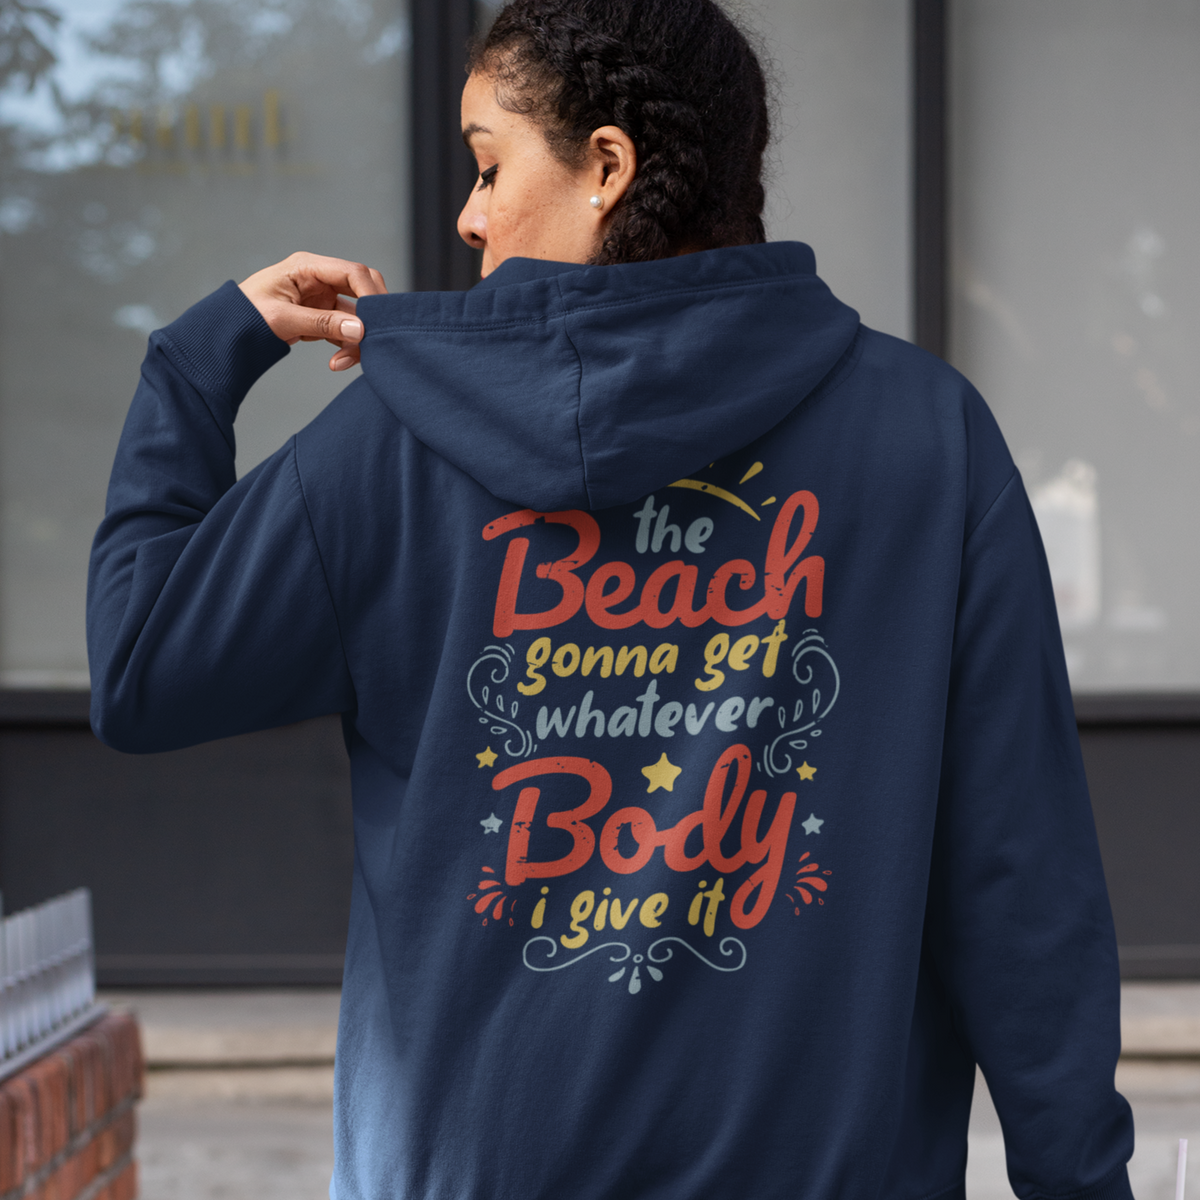 Beach Body Anti Diet Culture Funny Shirt